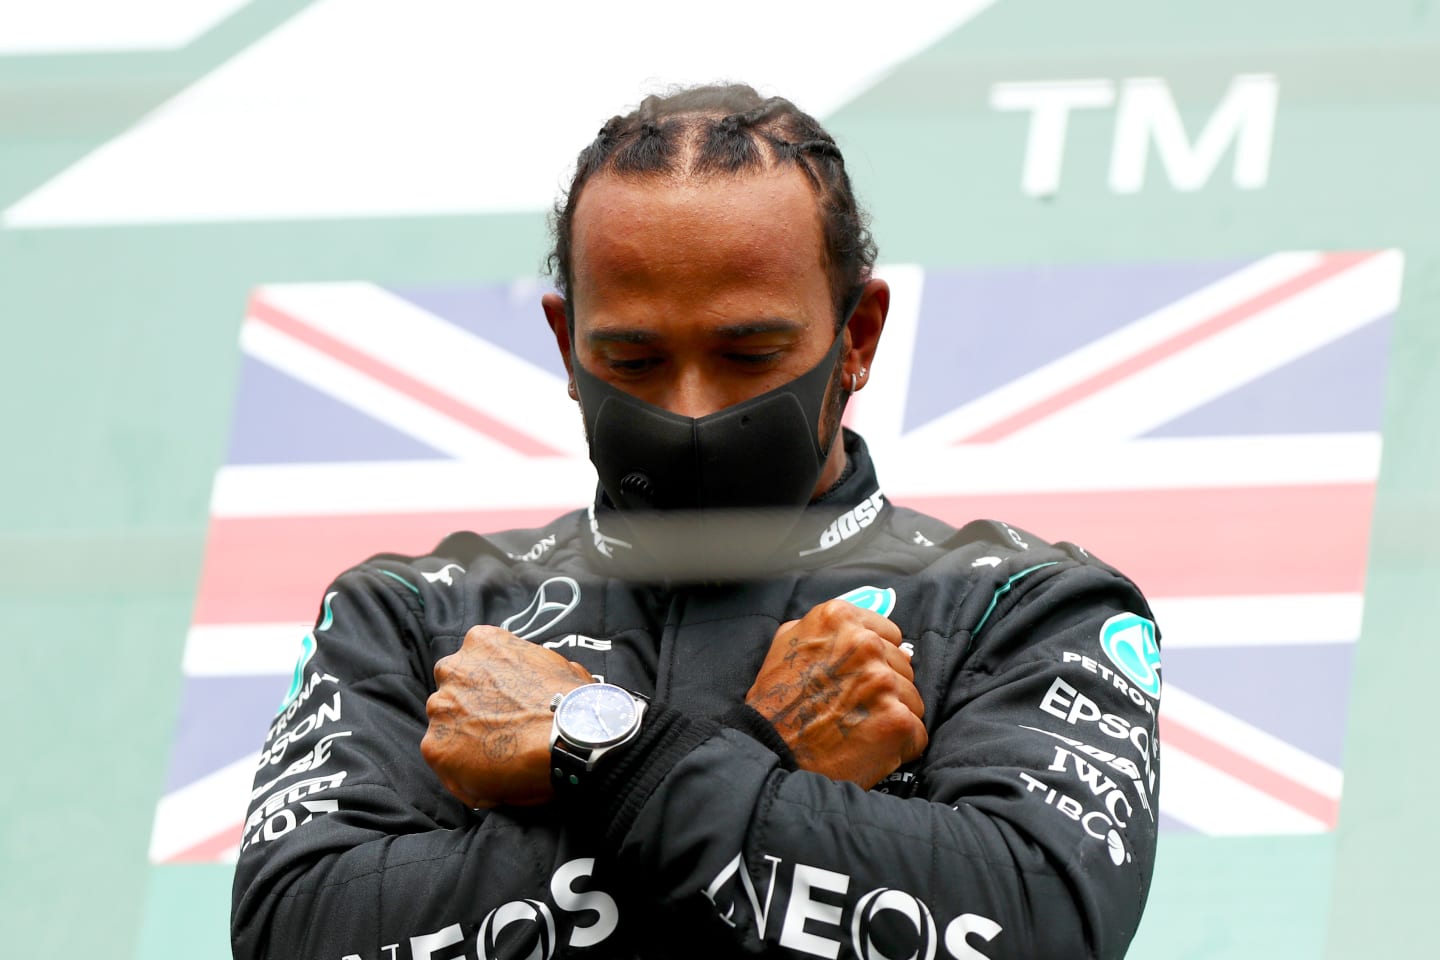 SPA, BELGIUM - AUGUST 30: Race winner Lewis Hamilton of Great Britain and Mercedes GP celebrates on